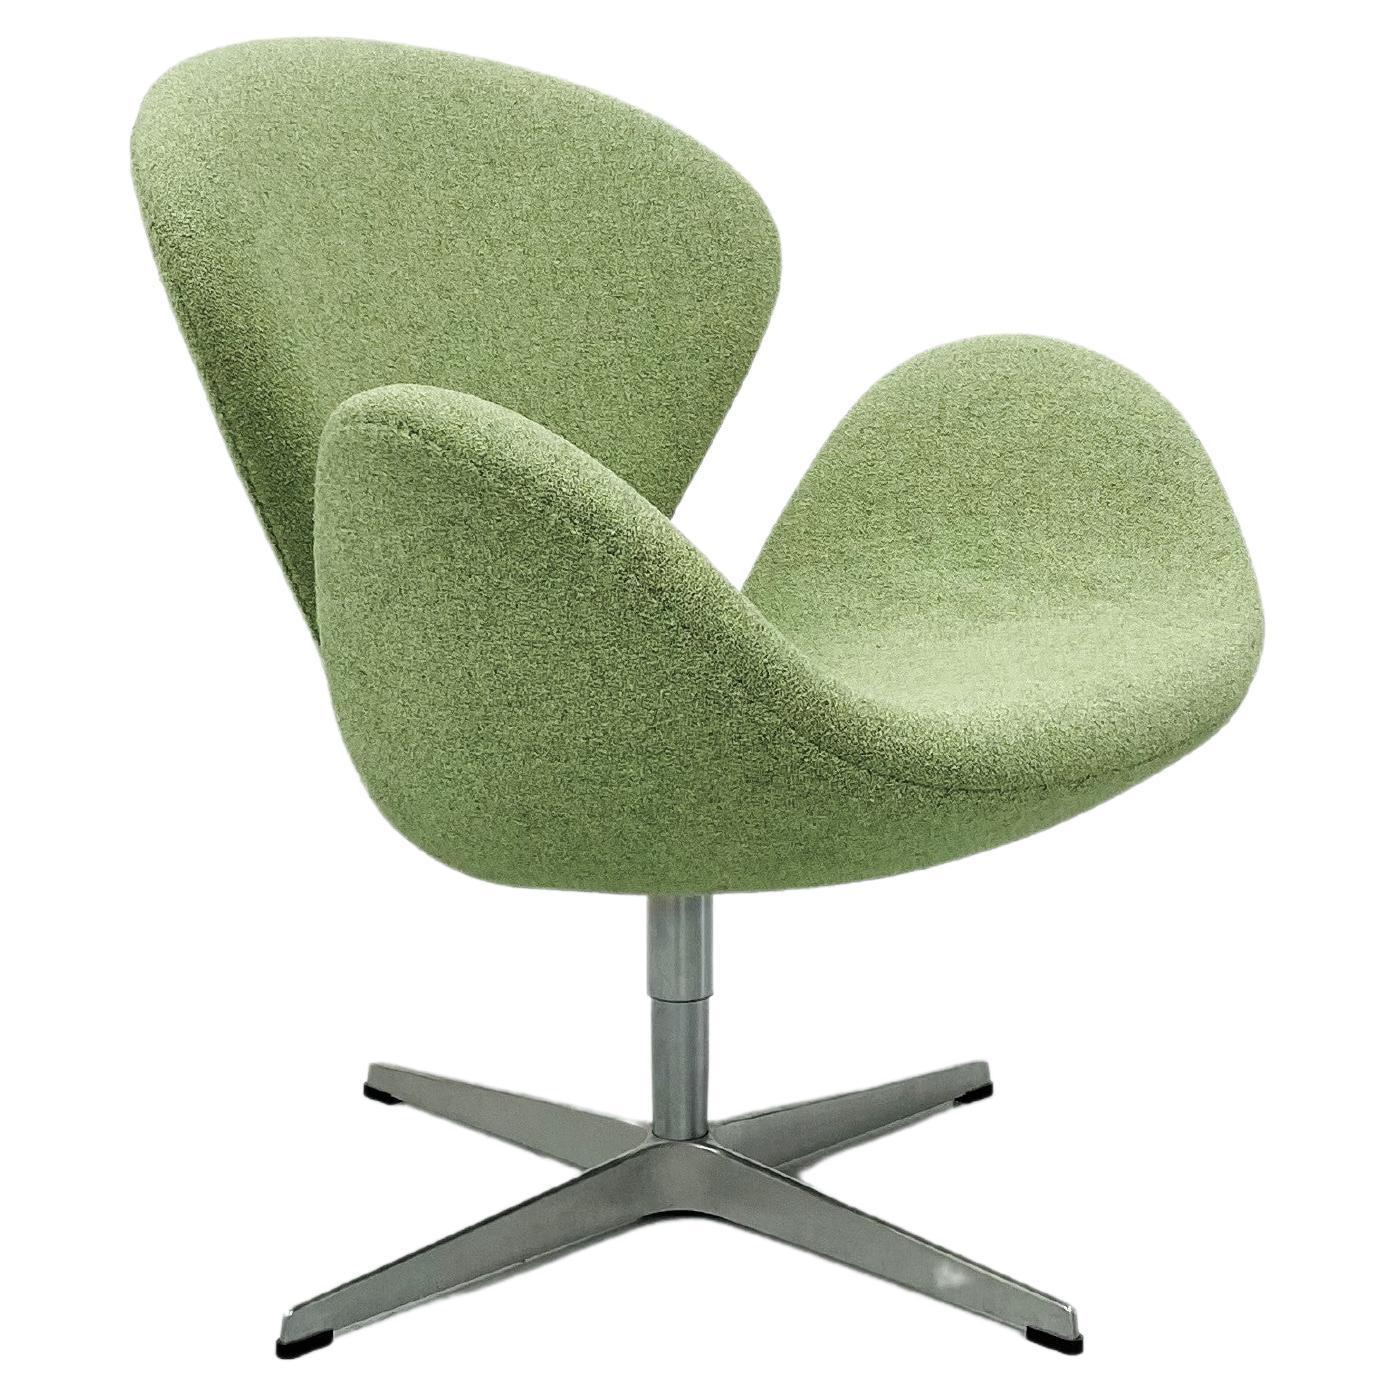 Swan Chair in Green Wool by Arne Jacobsen for Fritz Hansen, 1958